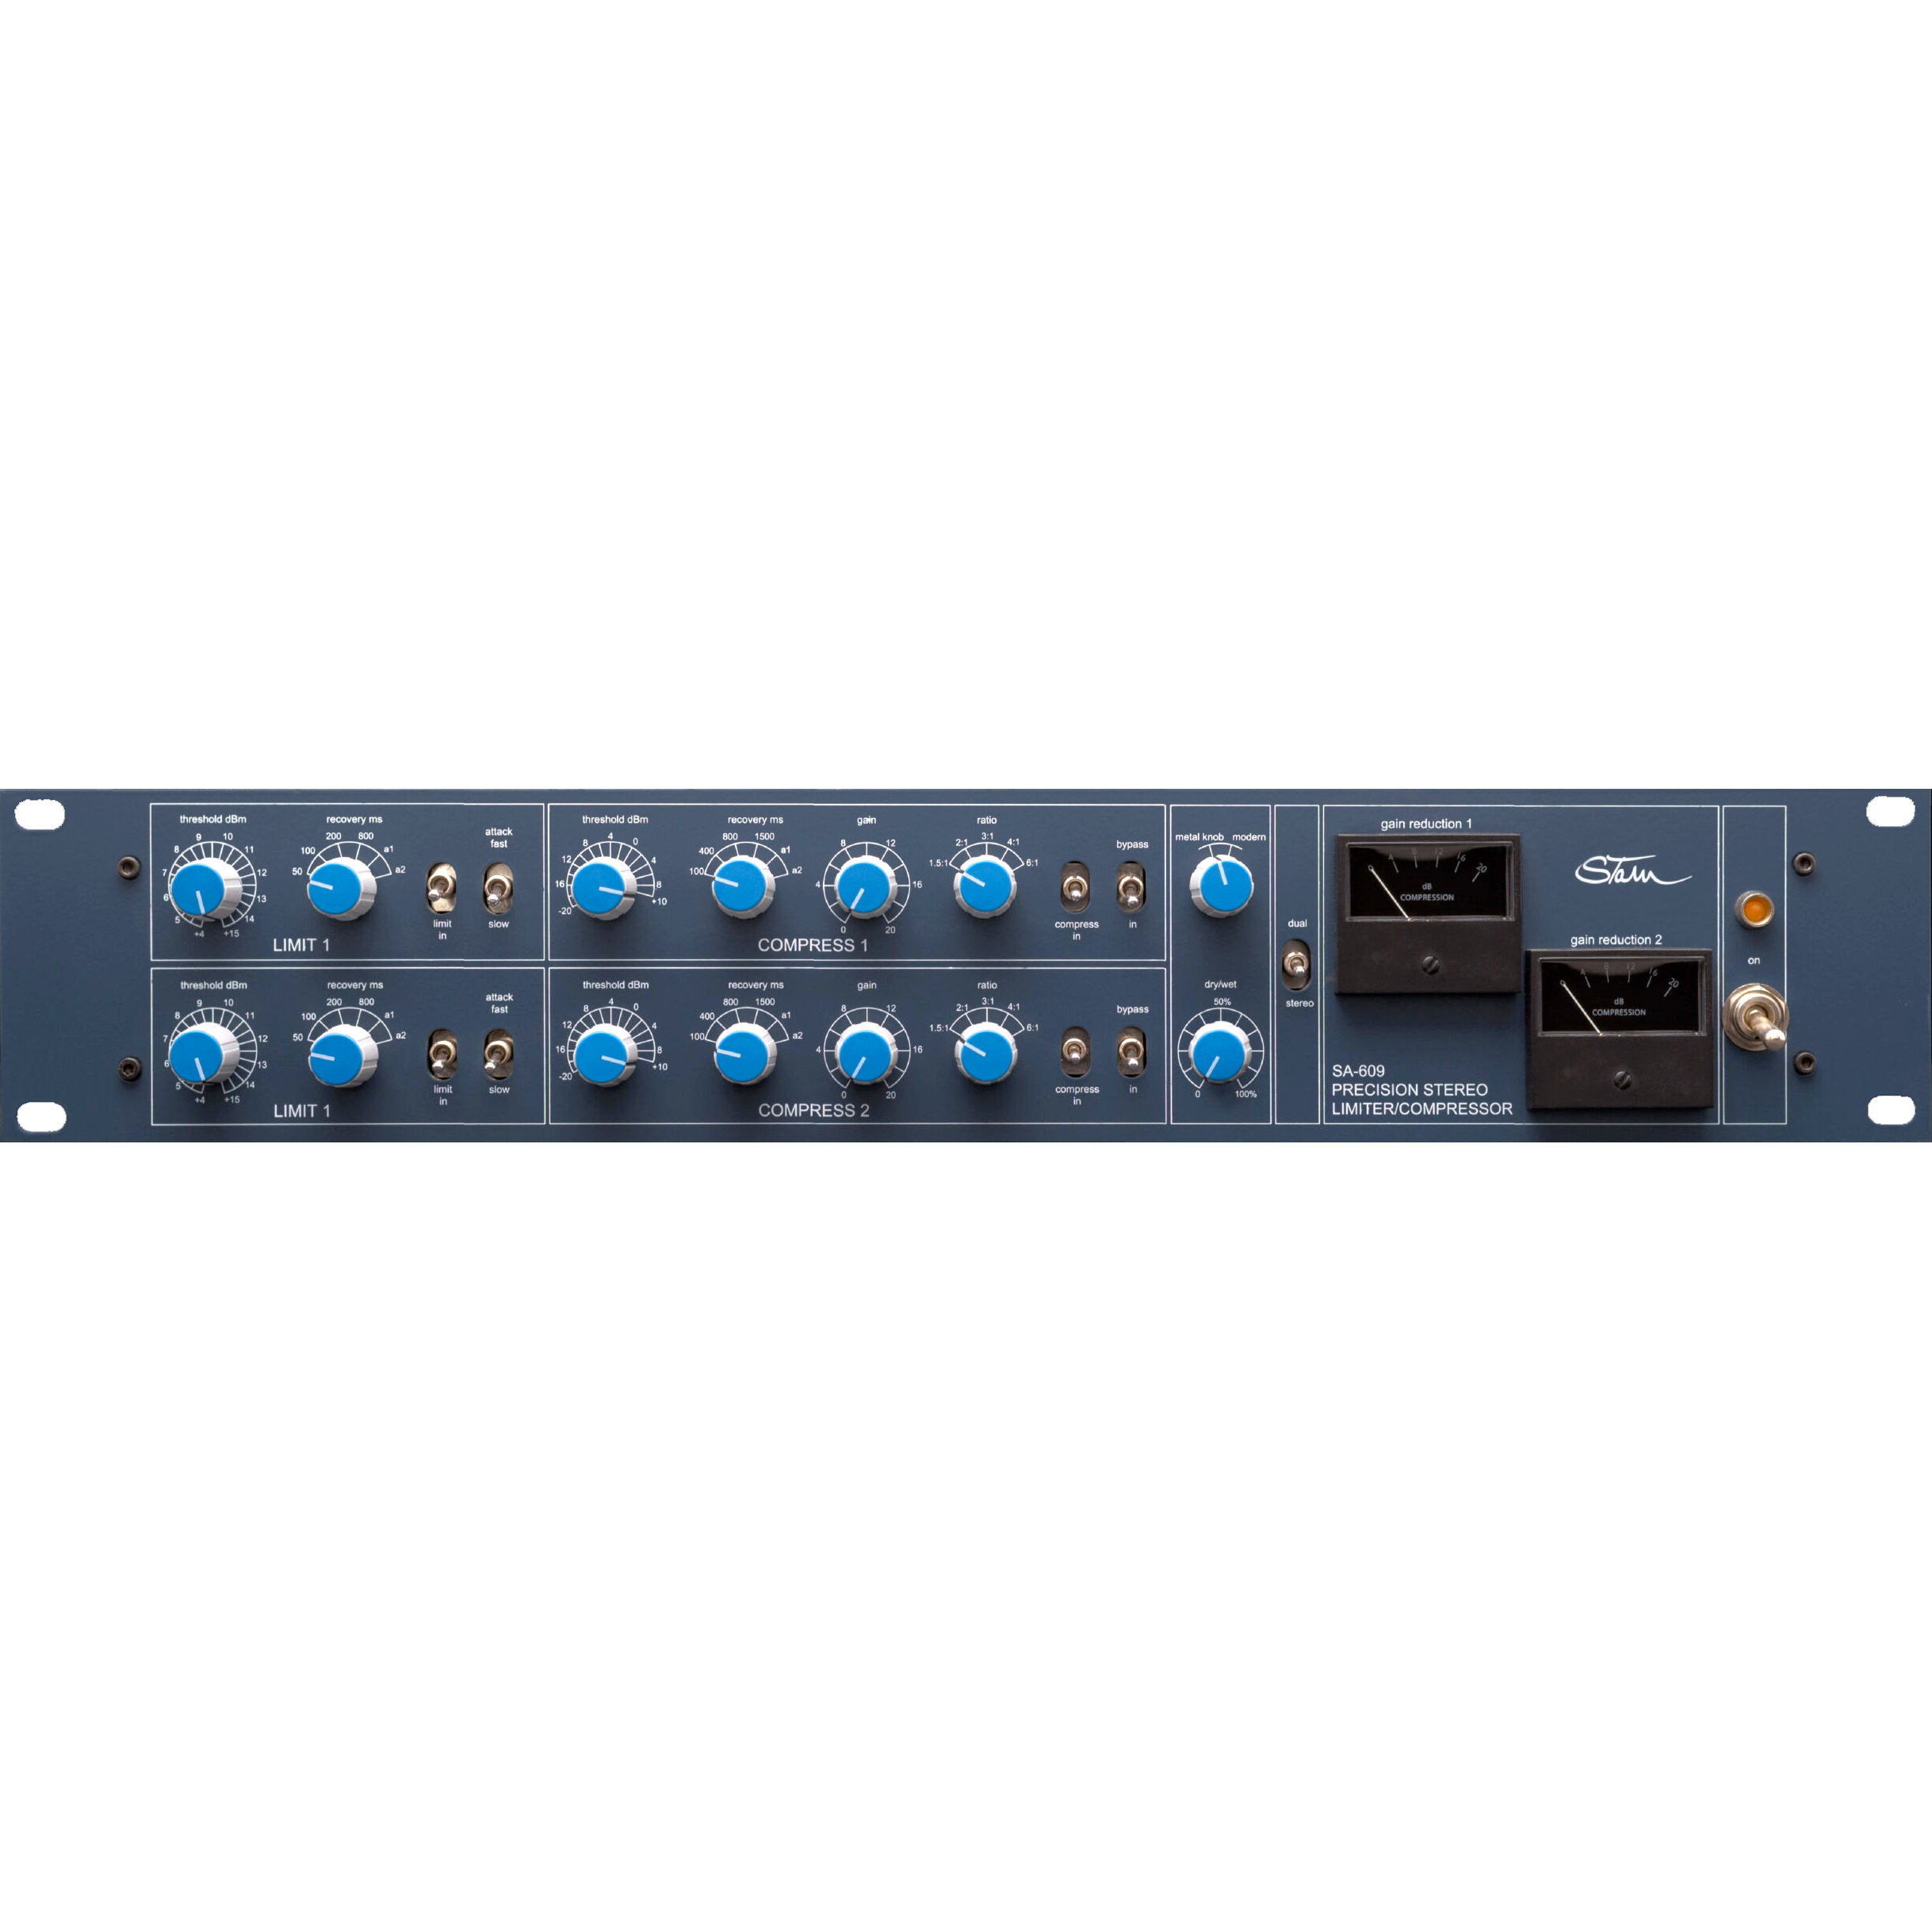 Stam Audio SA-609 MK2 | Compresión y limitación estéreo o mono dual